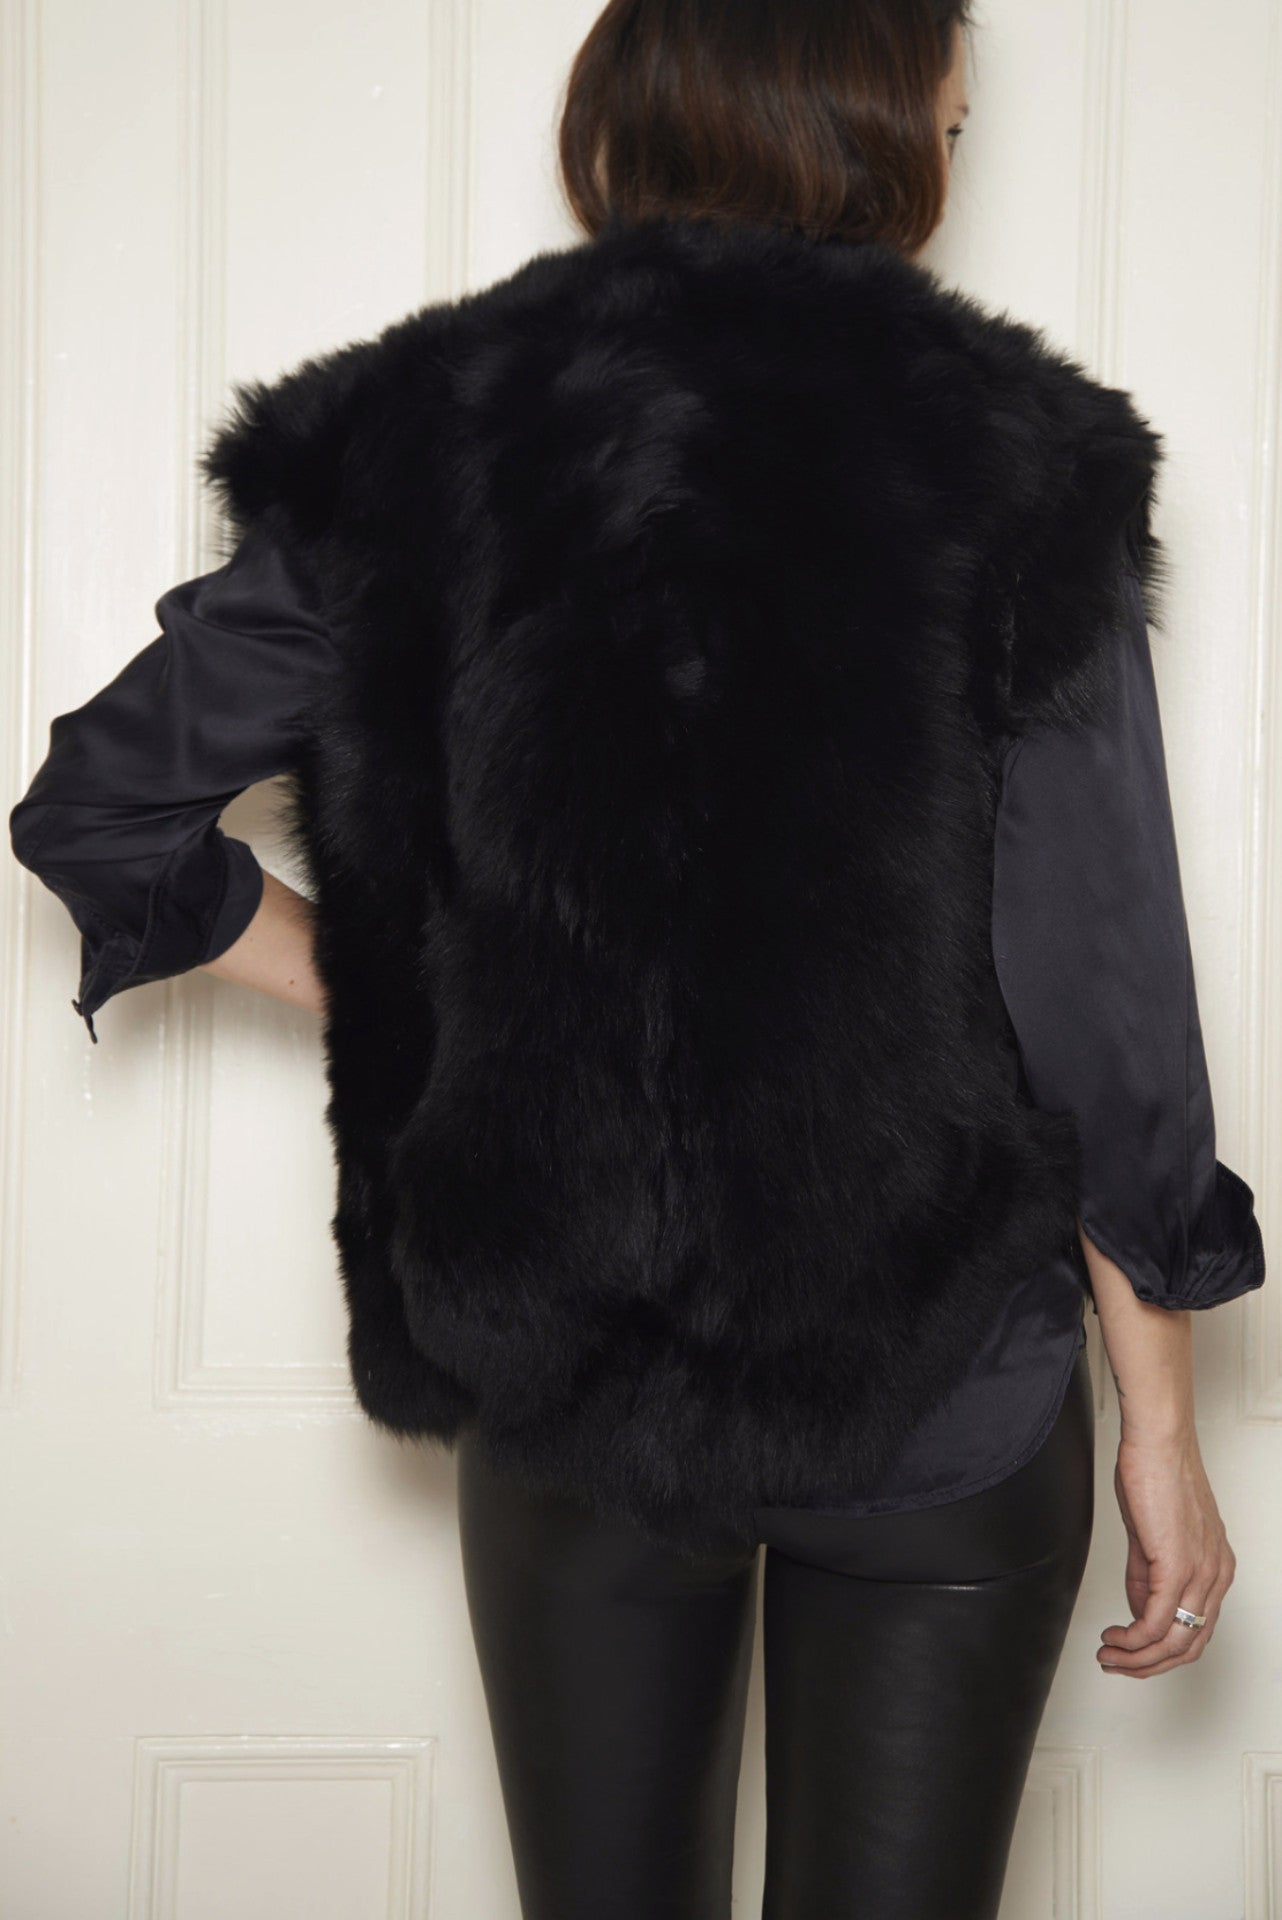 Shearling Lamb leather Jacket: Black